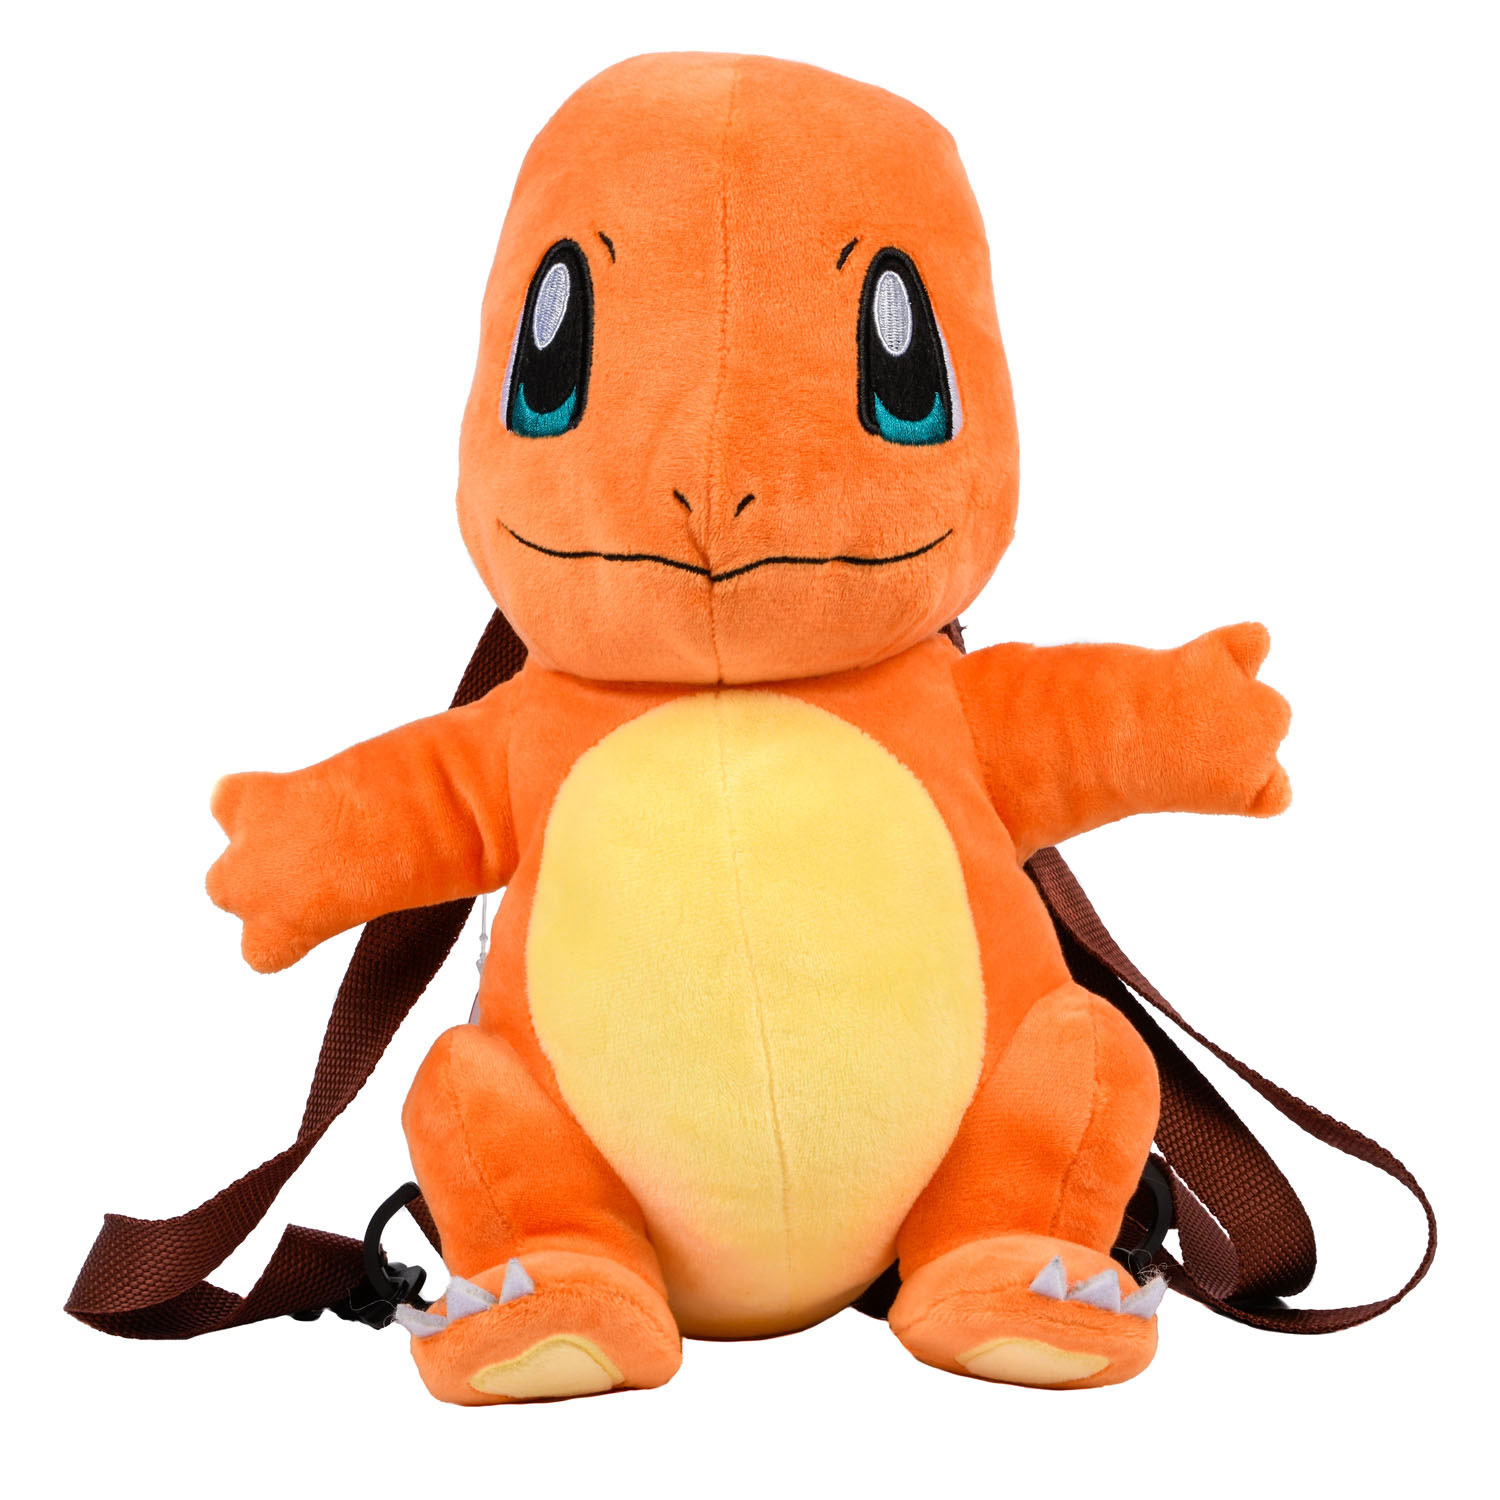 Pokémon 3D Backpack Plush Charmander